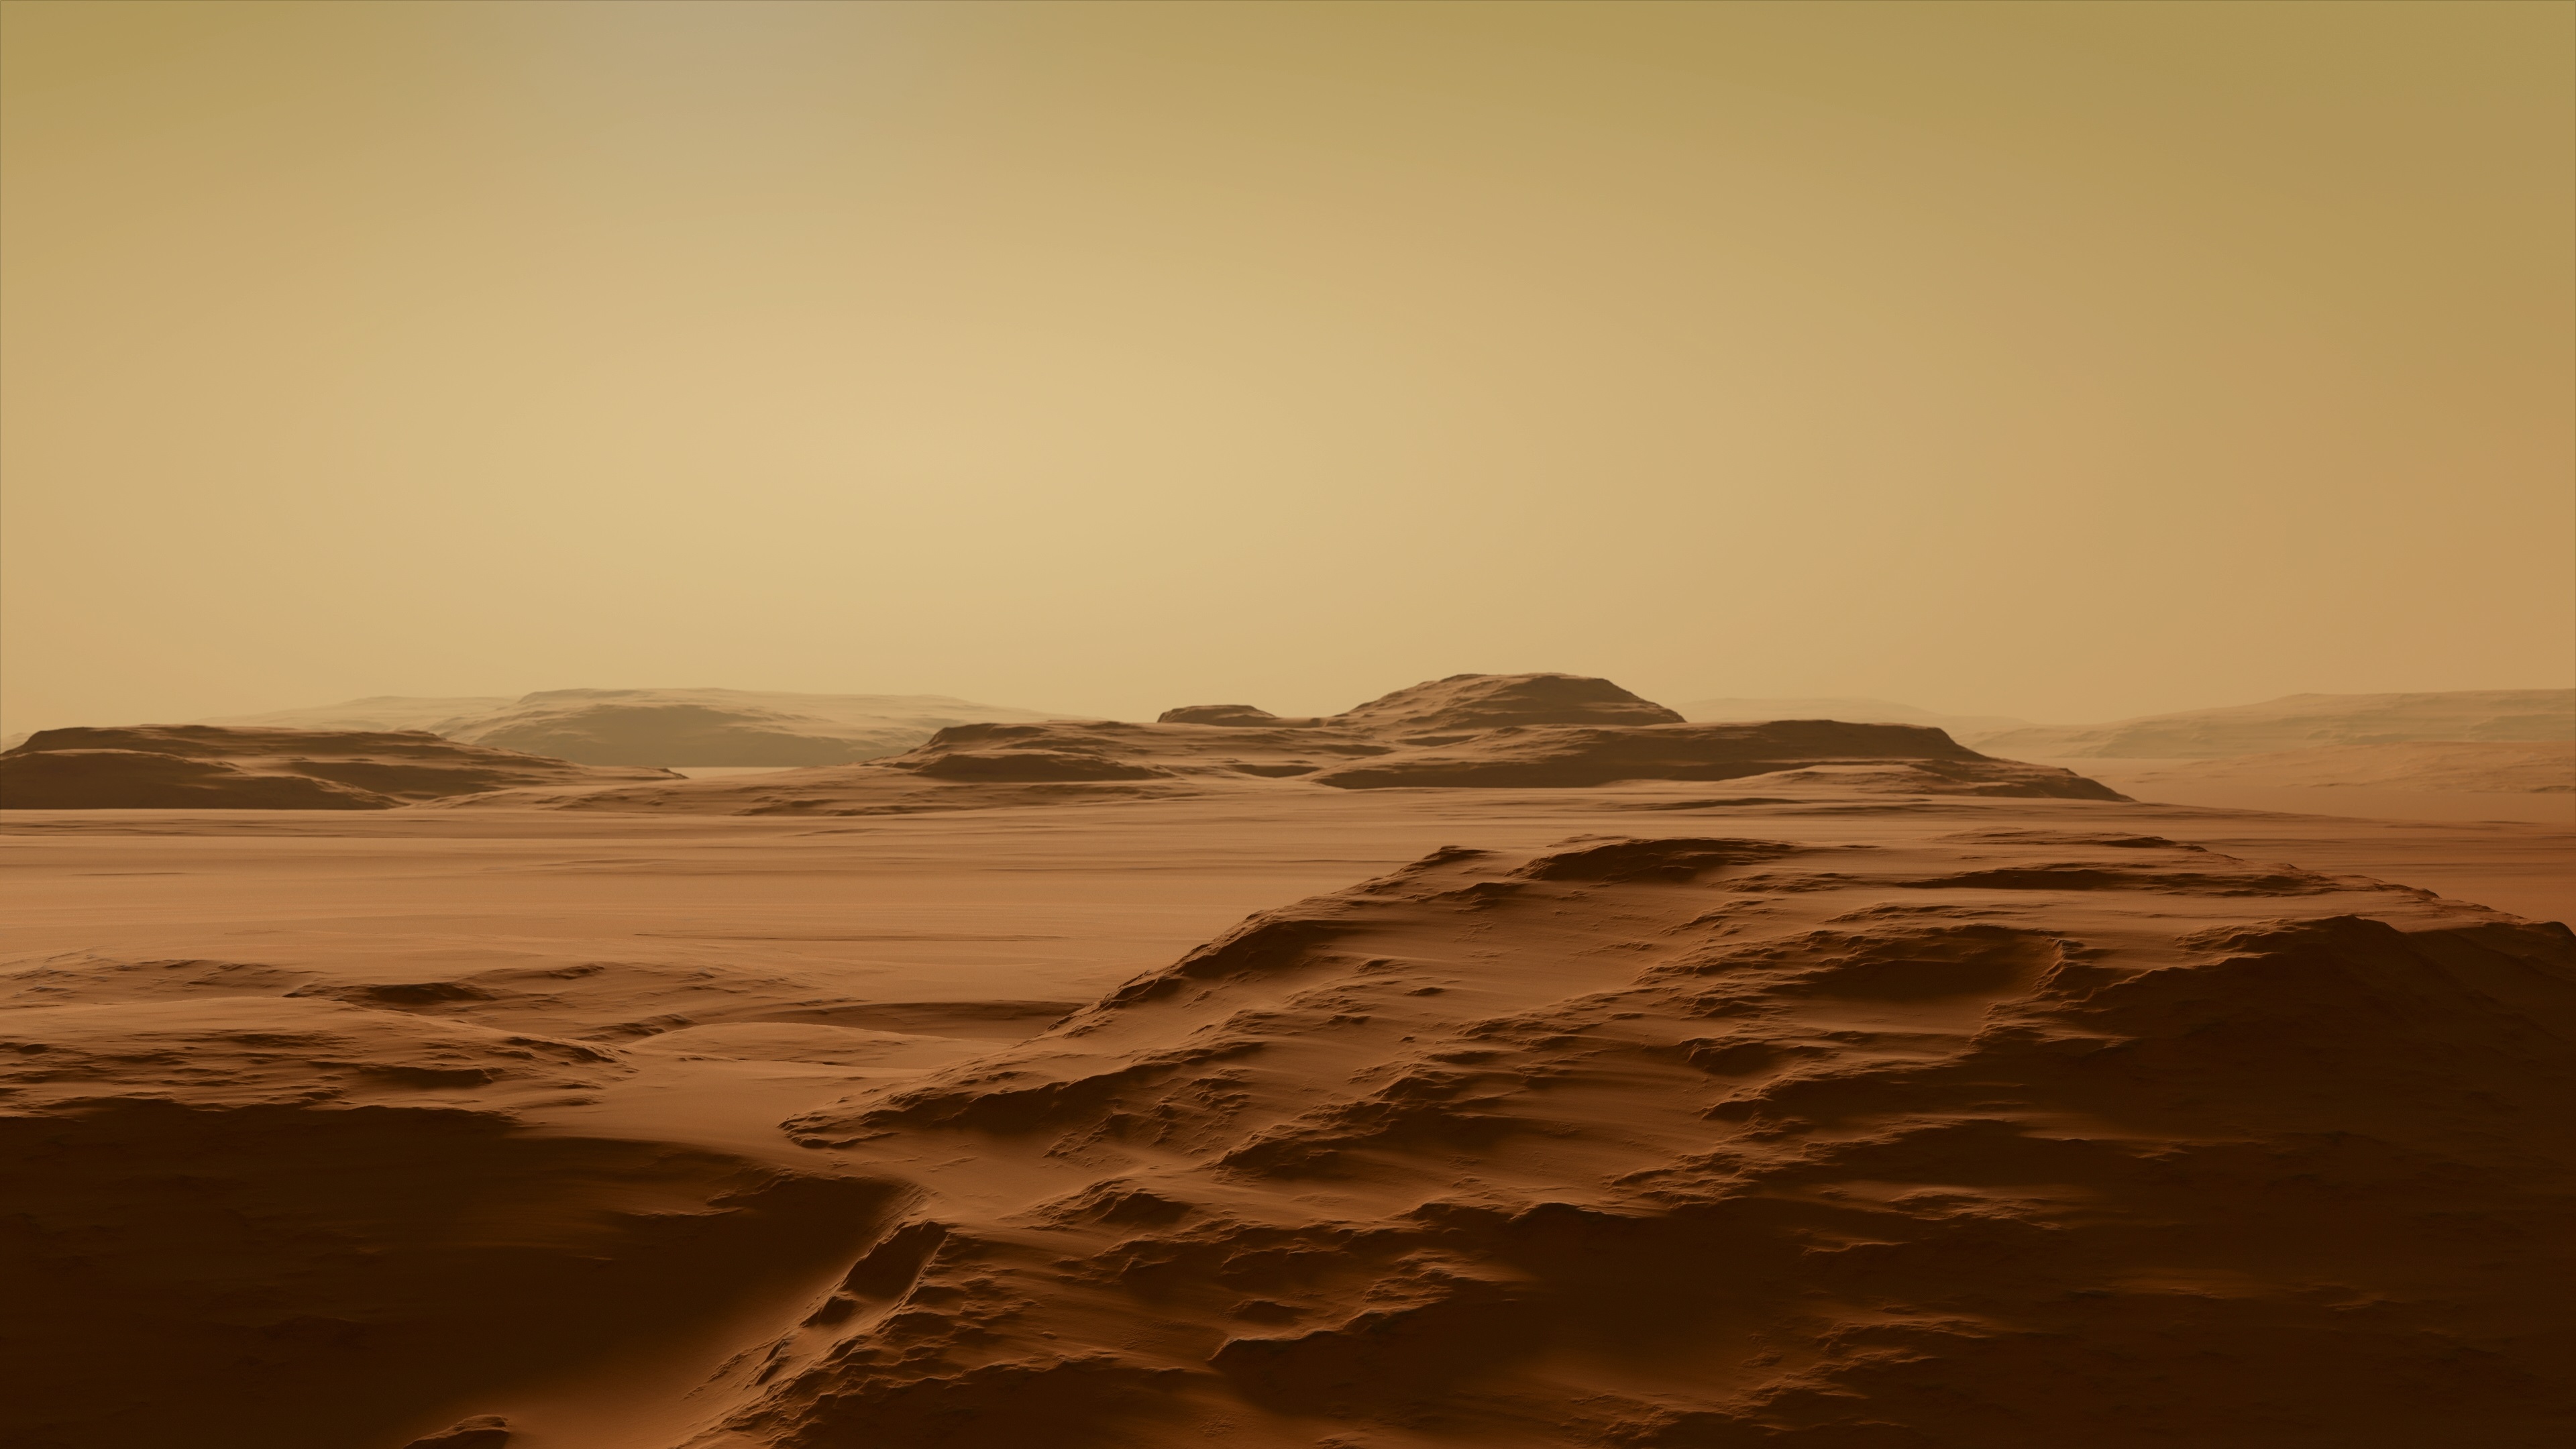 General 3840x2160 desert nature dirt Mars landscape sunlight dunes sand hills mist CGI